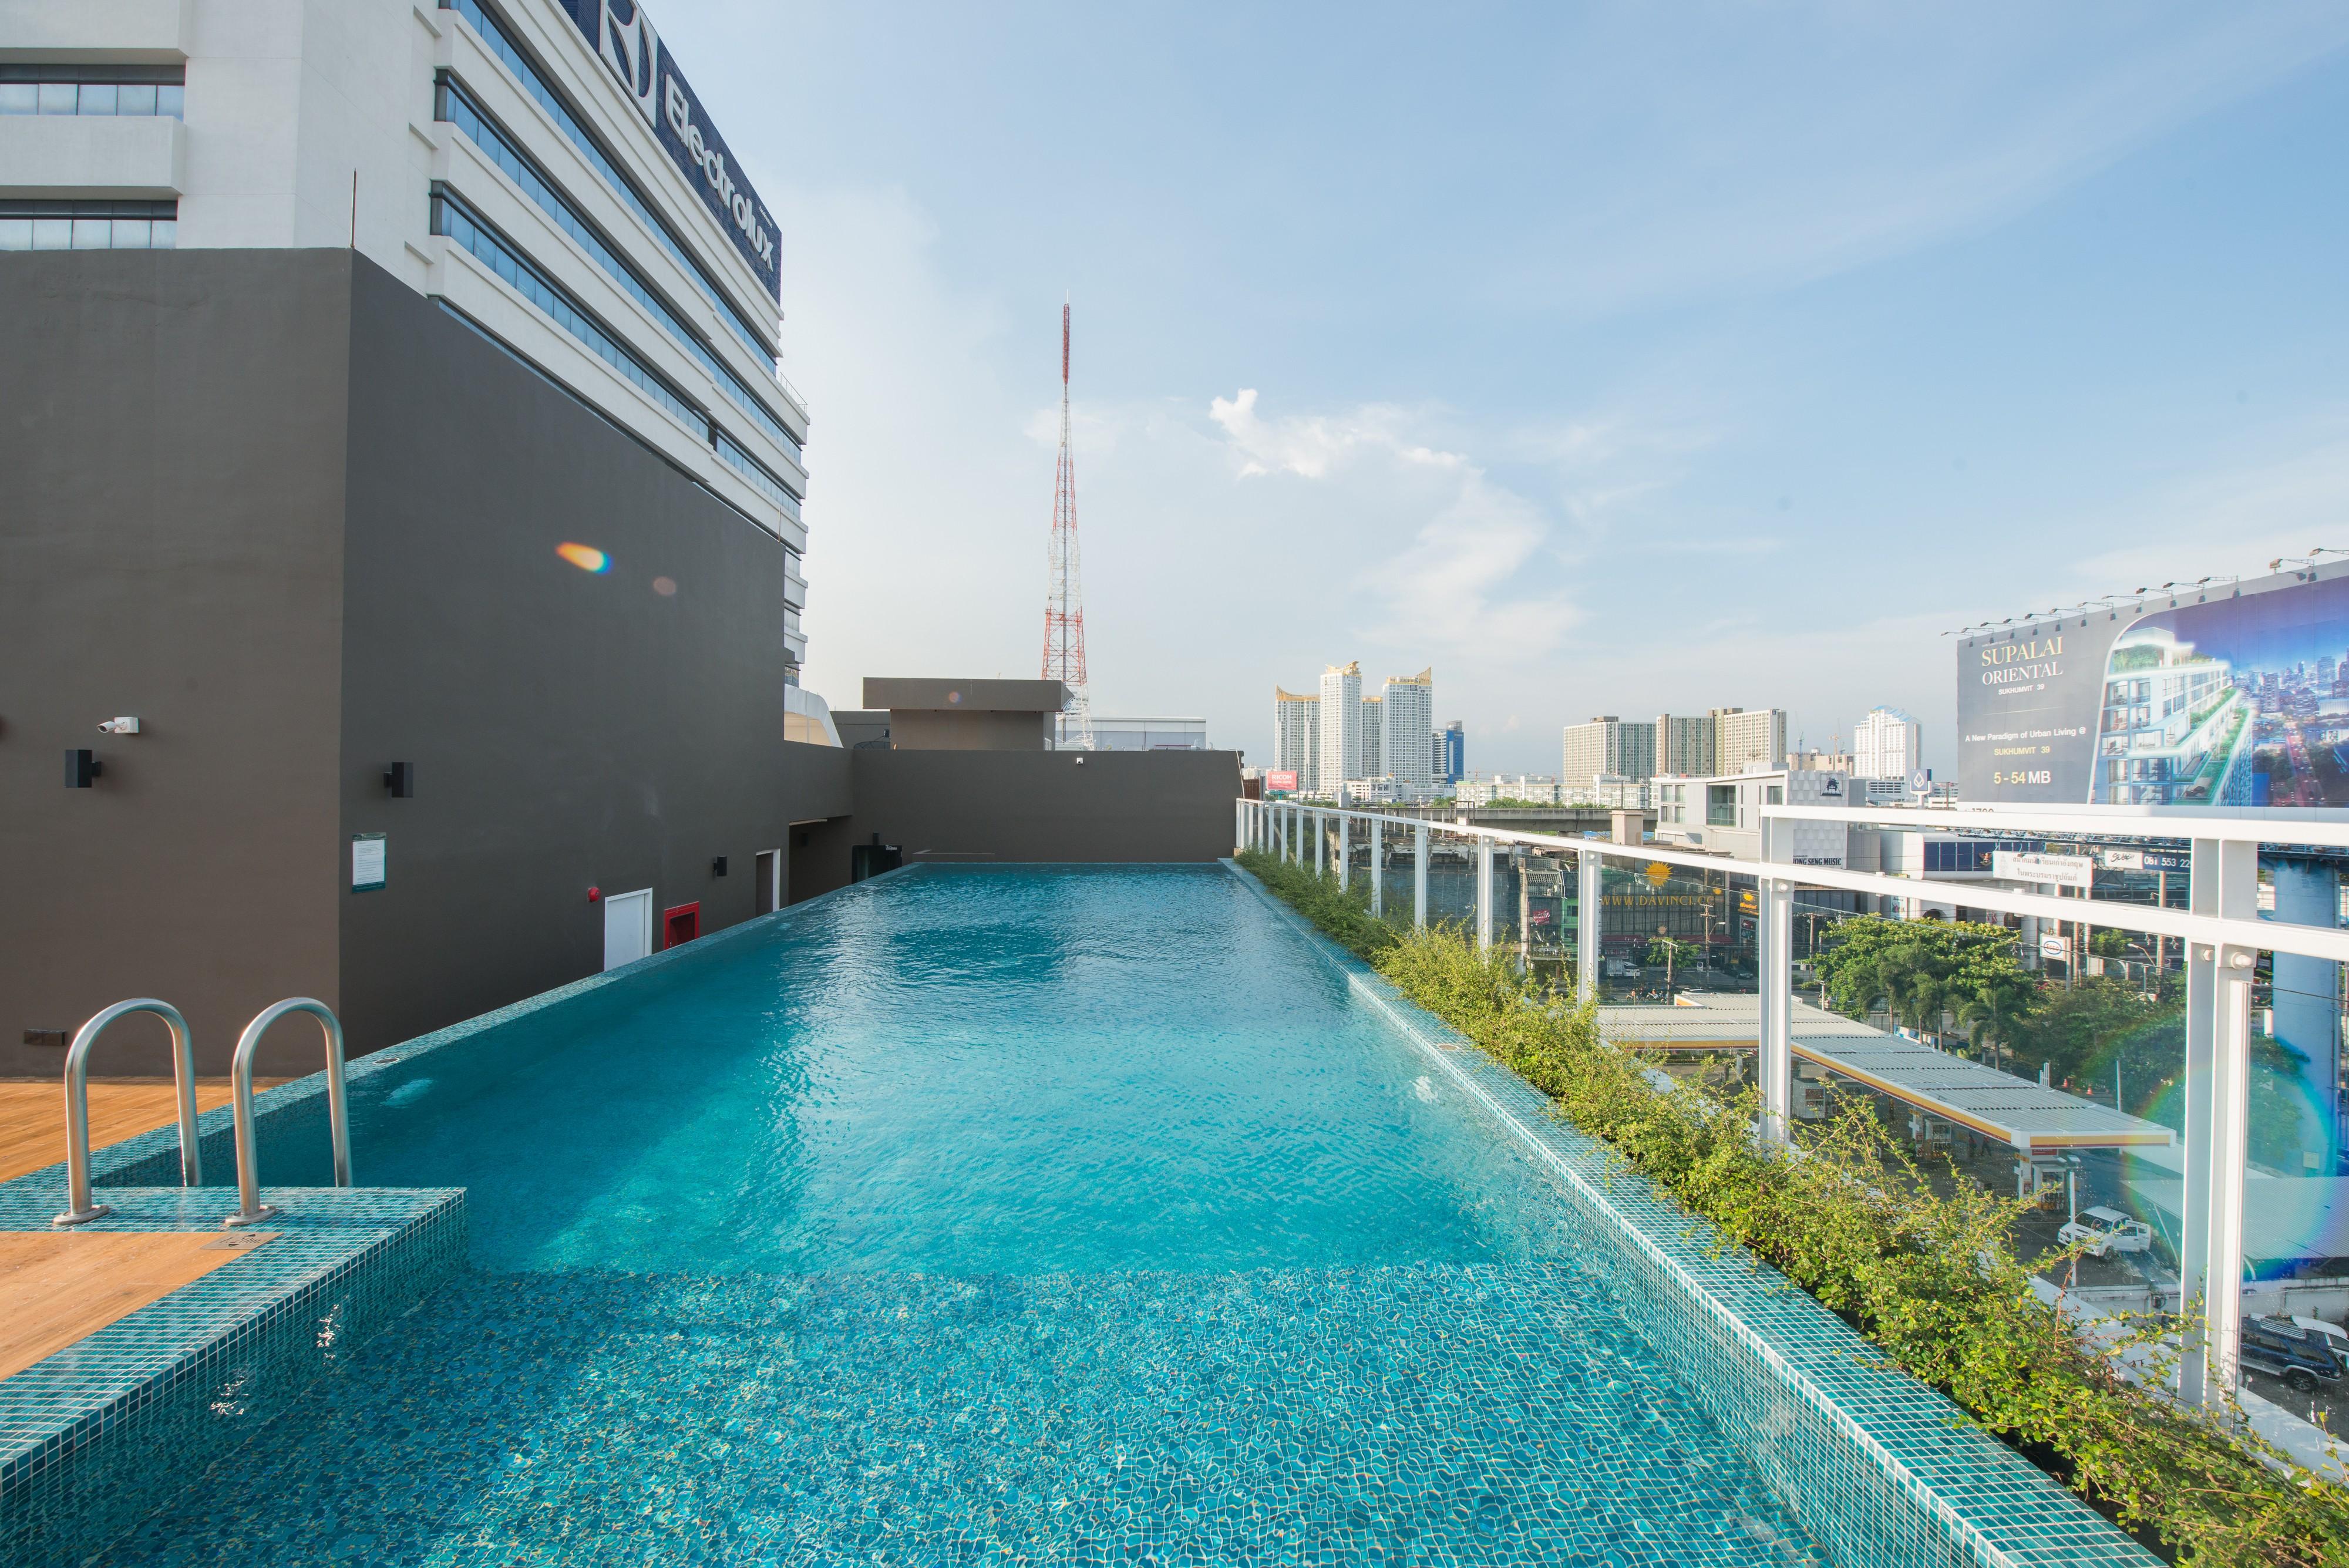 Maven Stylish Hotel Bangkok Exterior foto